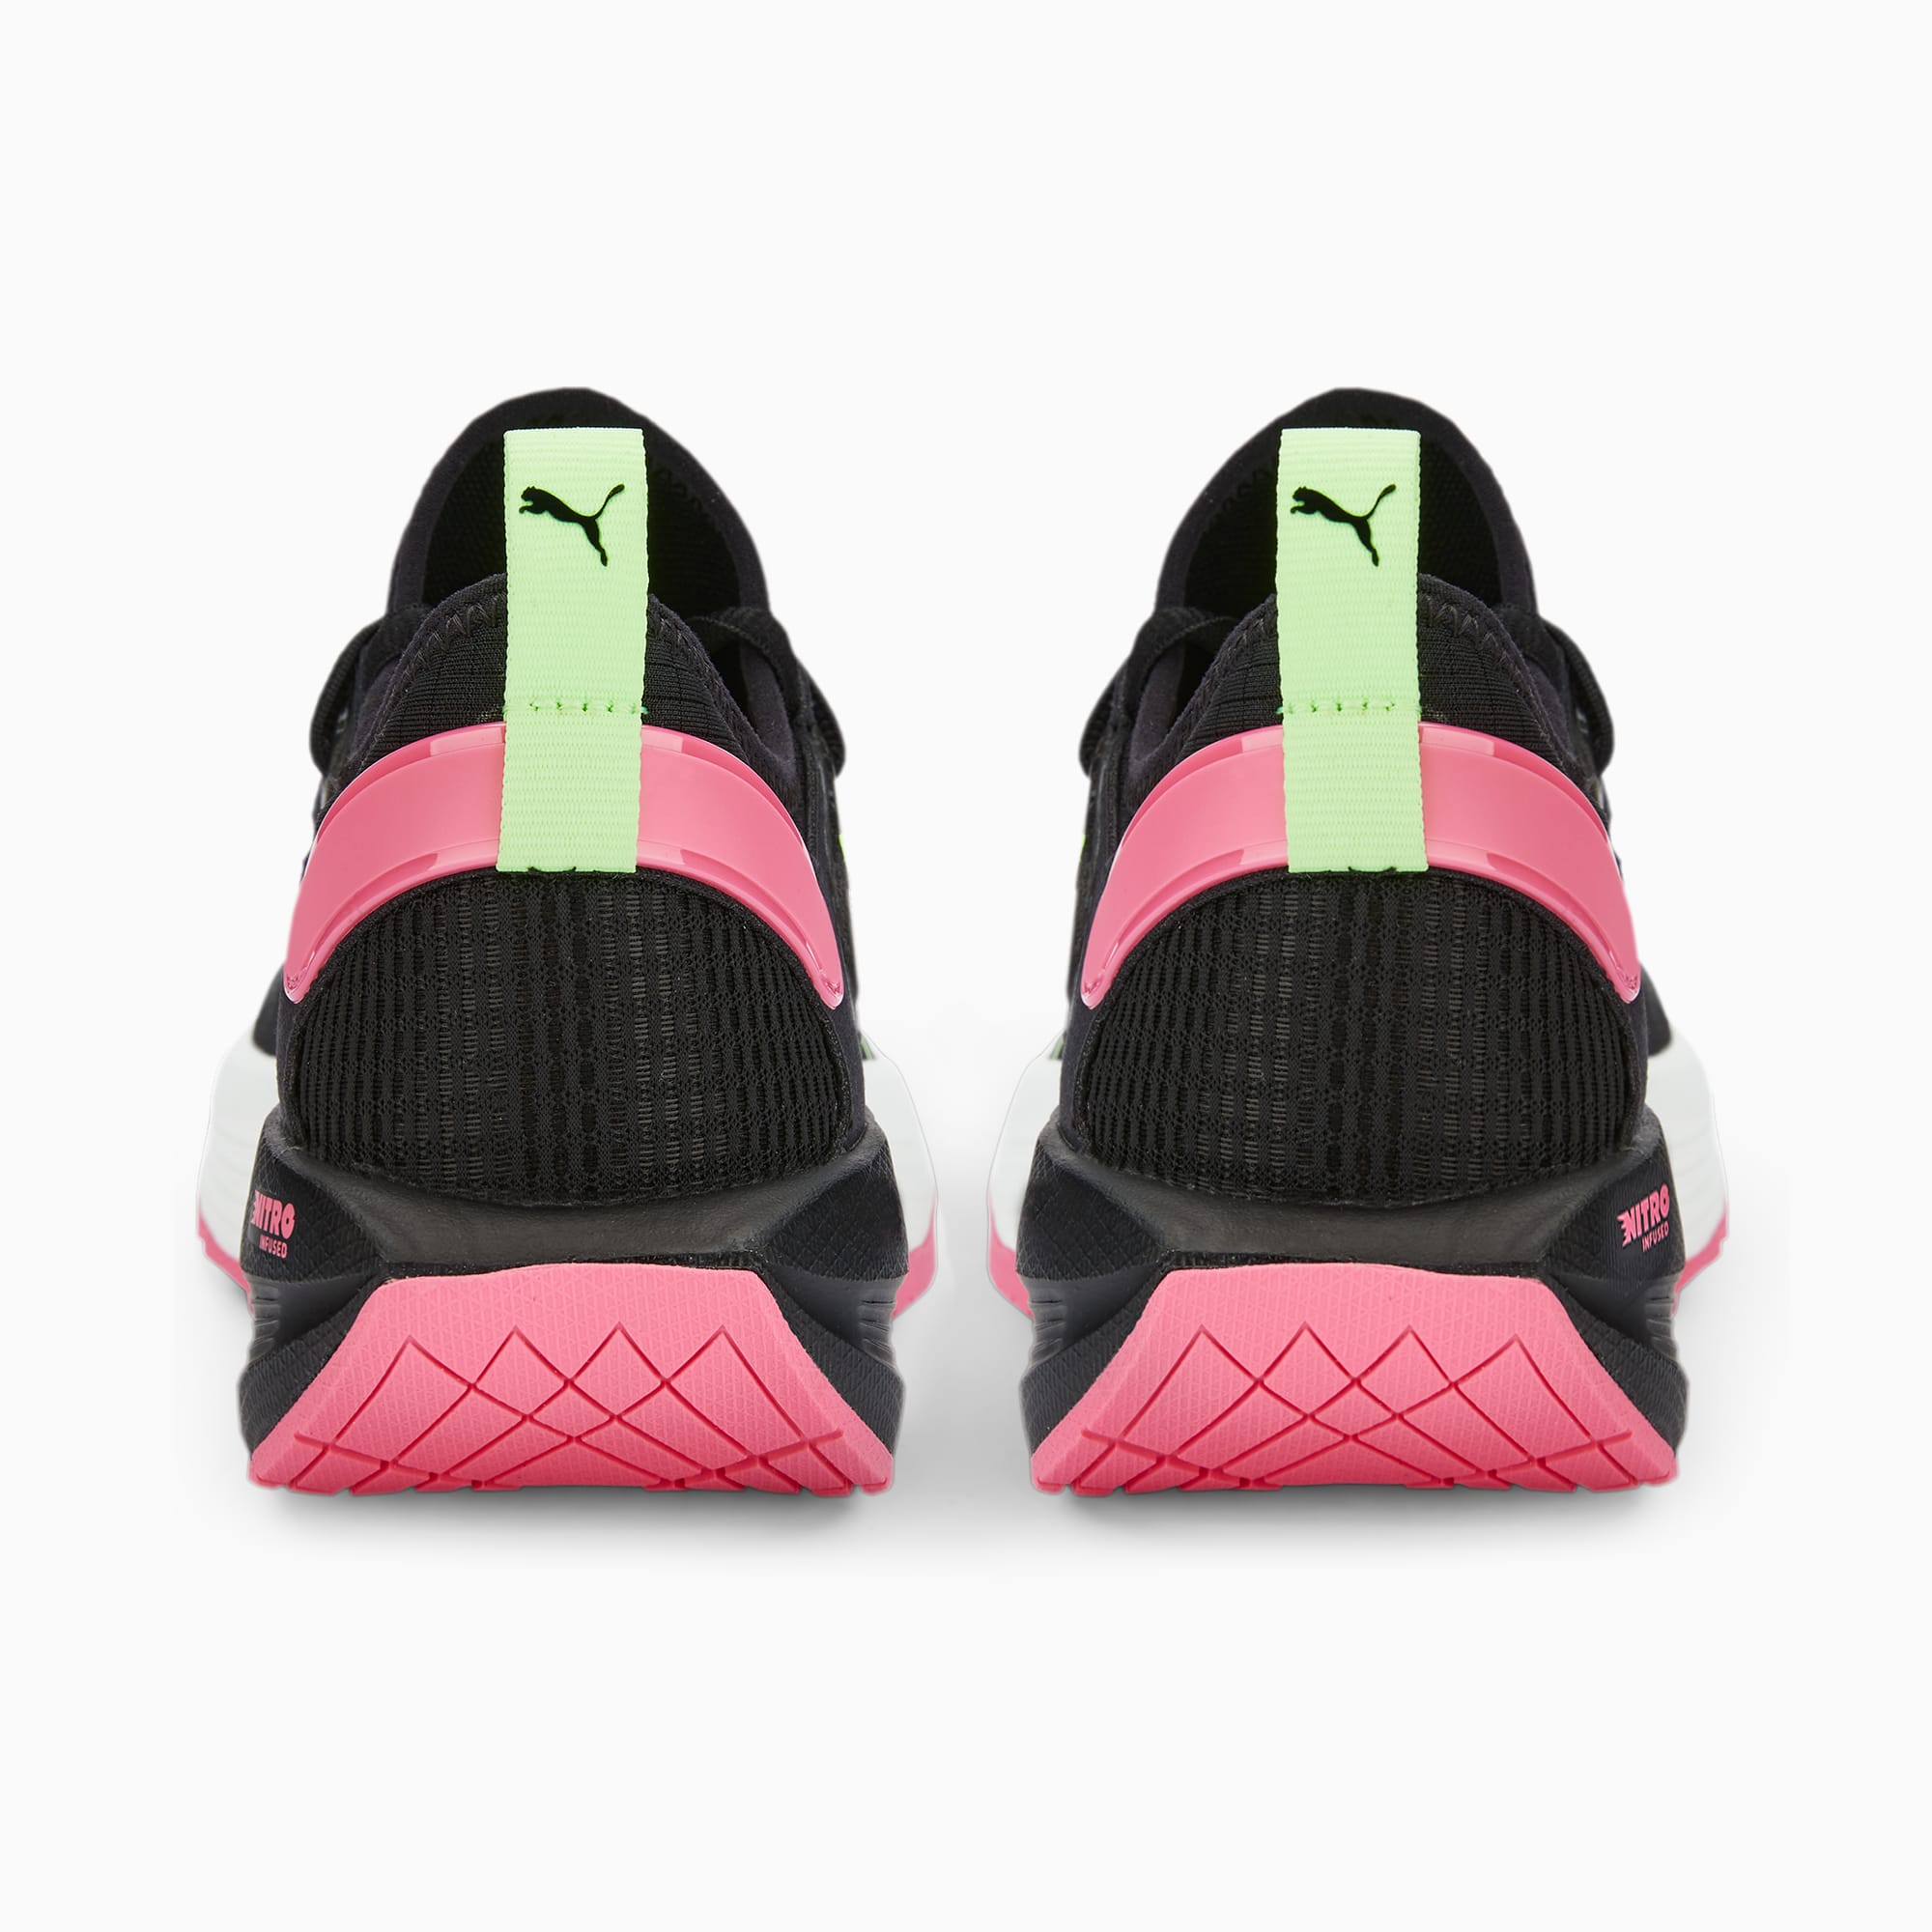  Puma Womens Pwr Xx Nitro Safari Glam Training Sneakers Shoes -  Pink - Size 5.5 M